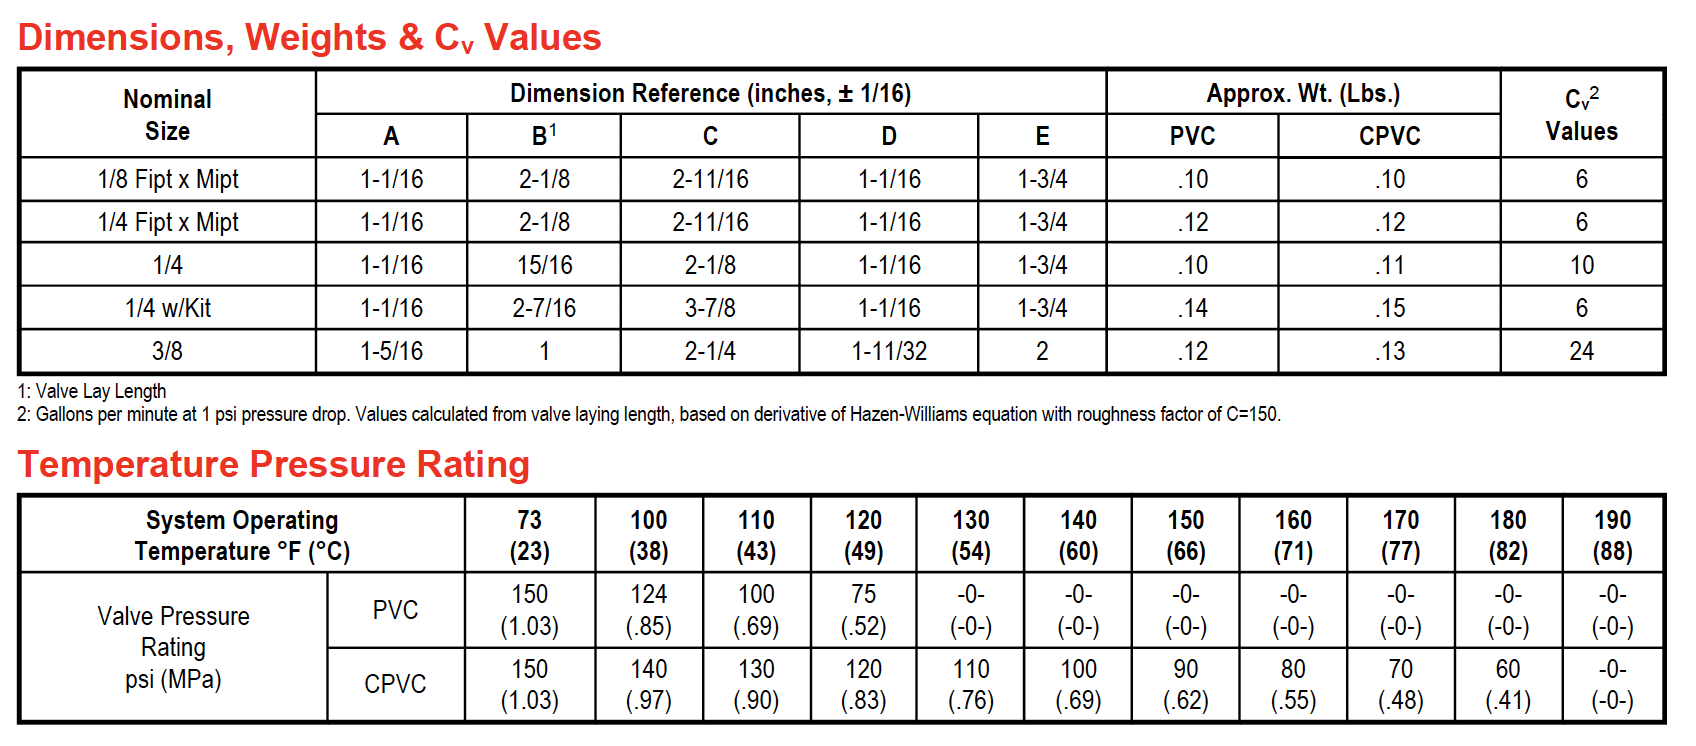 Dimensions, Weights & Cv Values. Temperature Pressure Ratting.